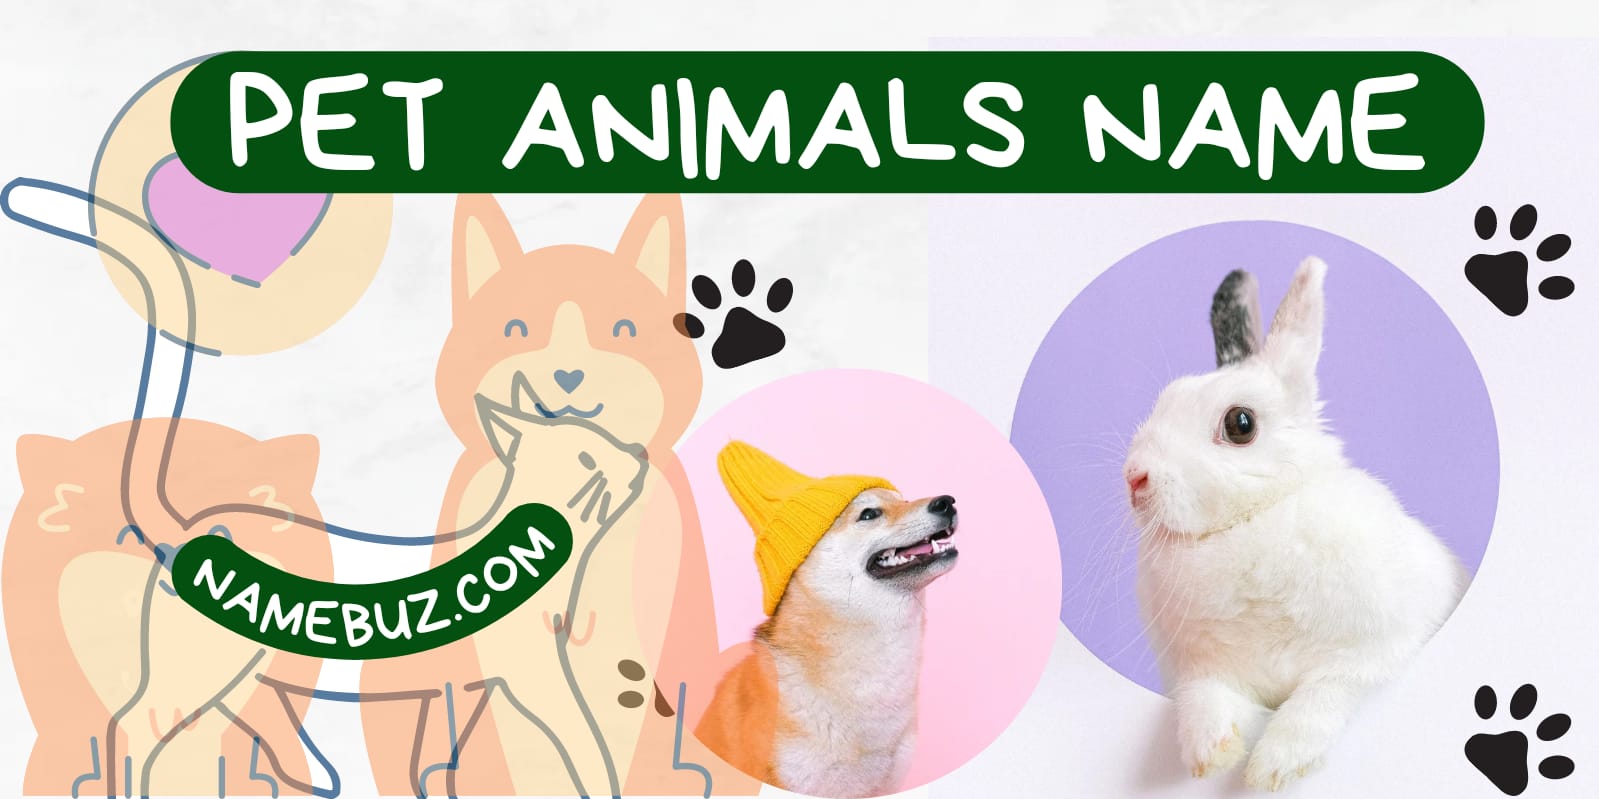 Pet animals name